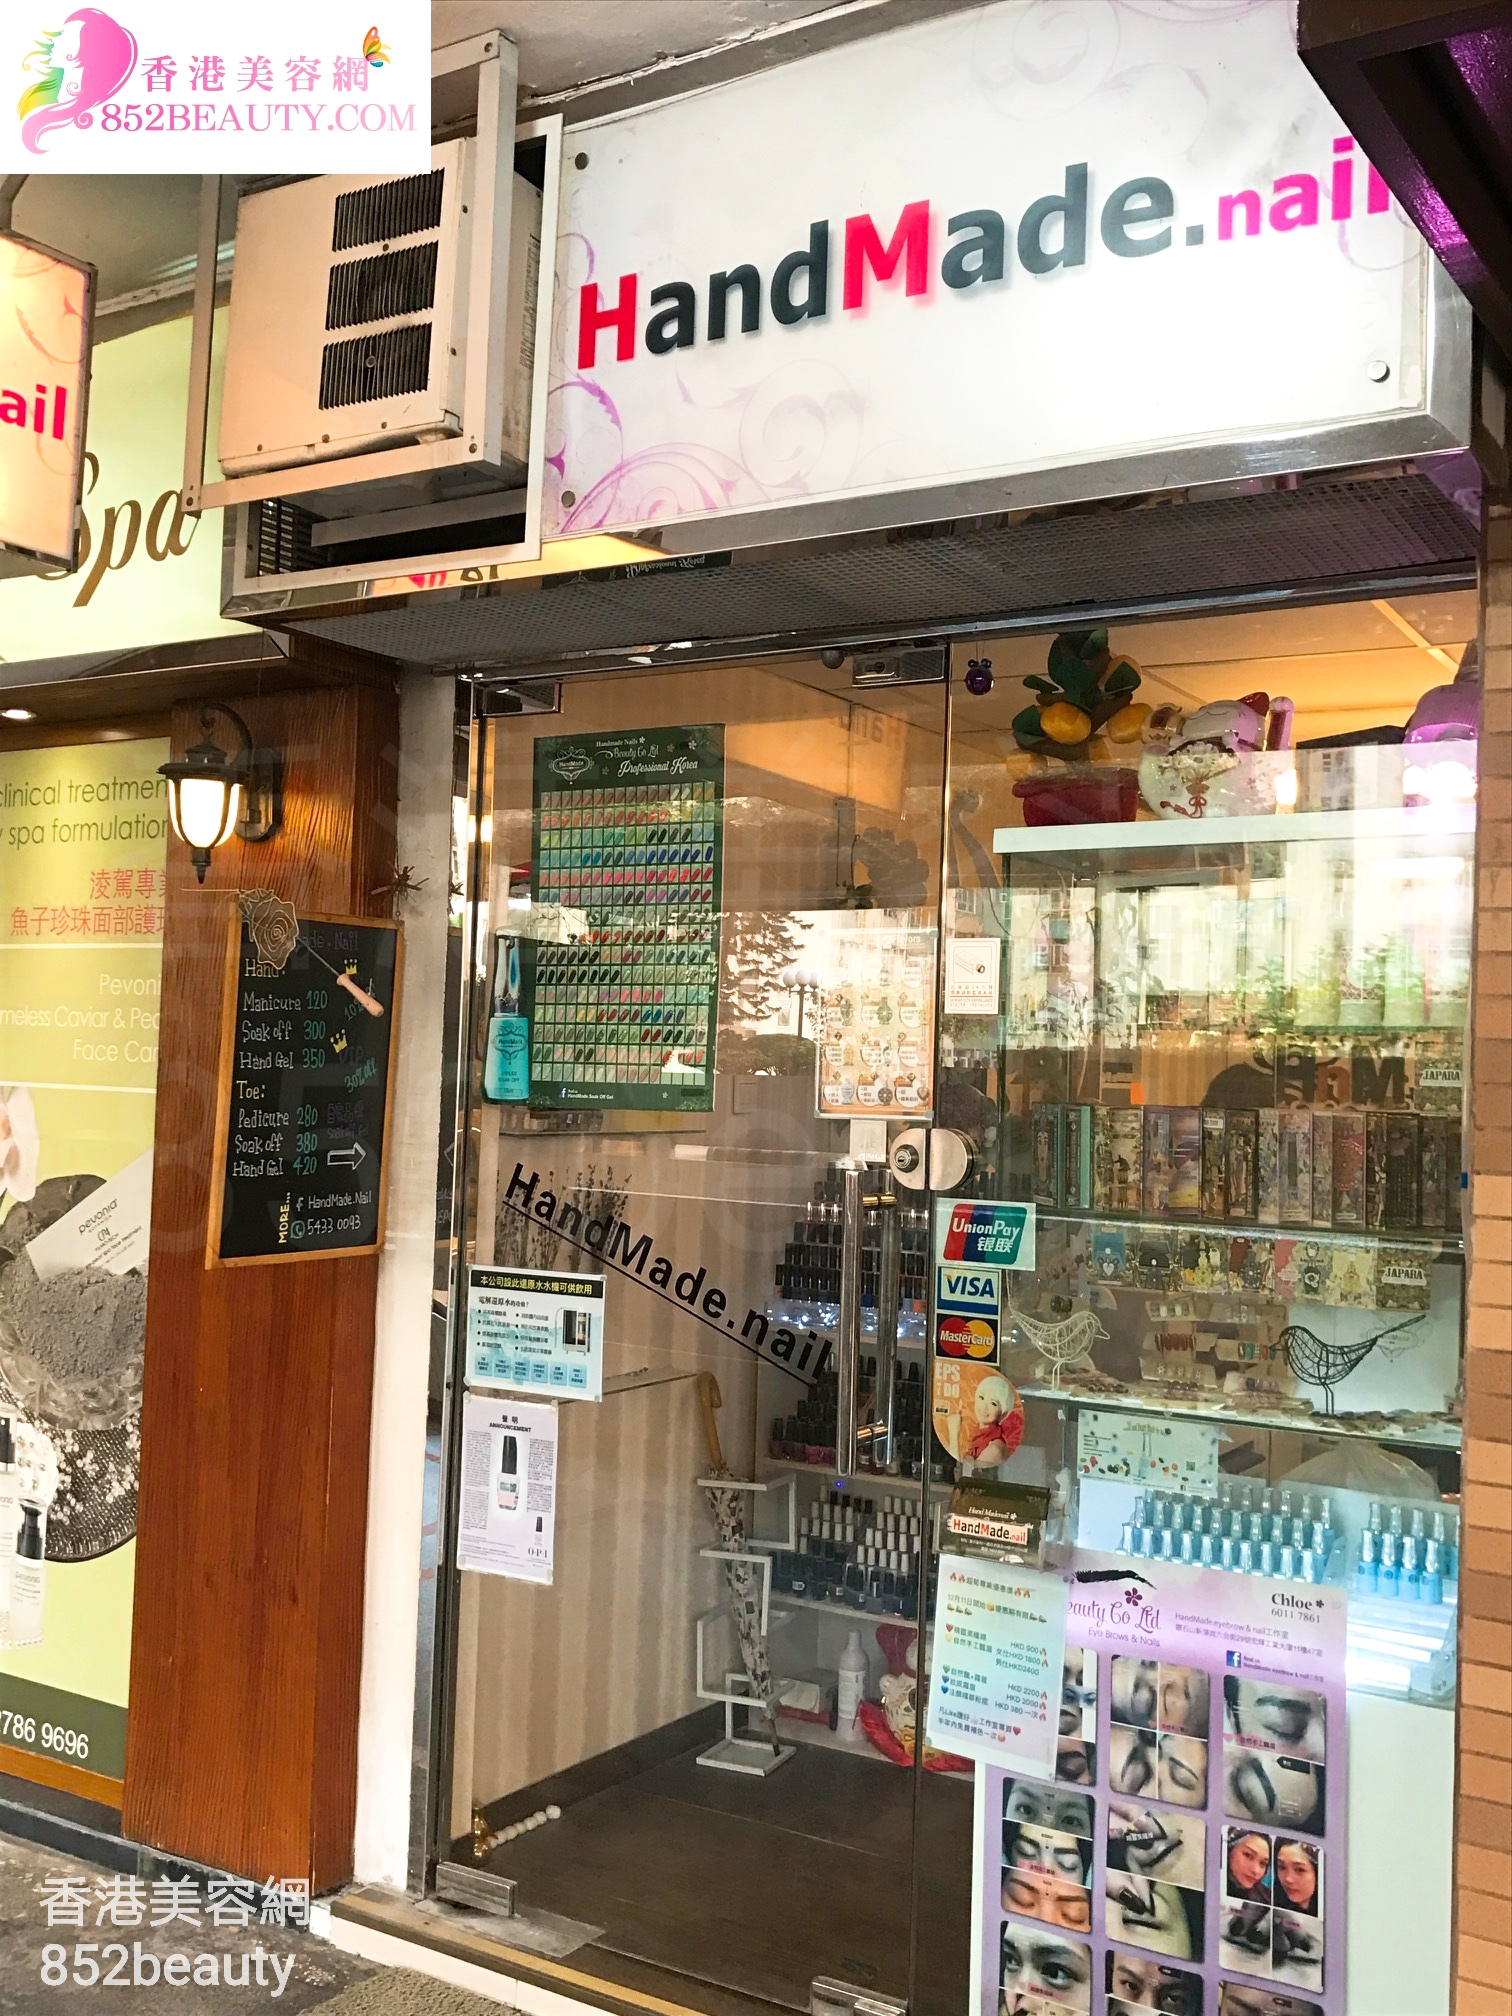 Manicure: HandMade.Nail